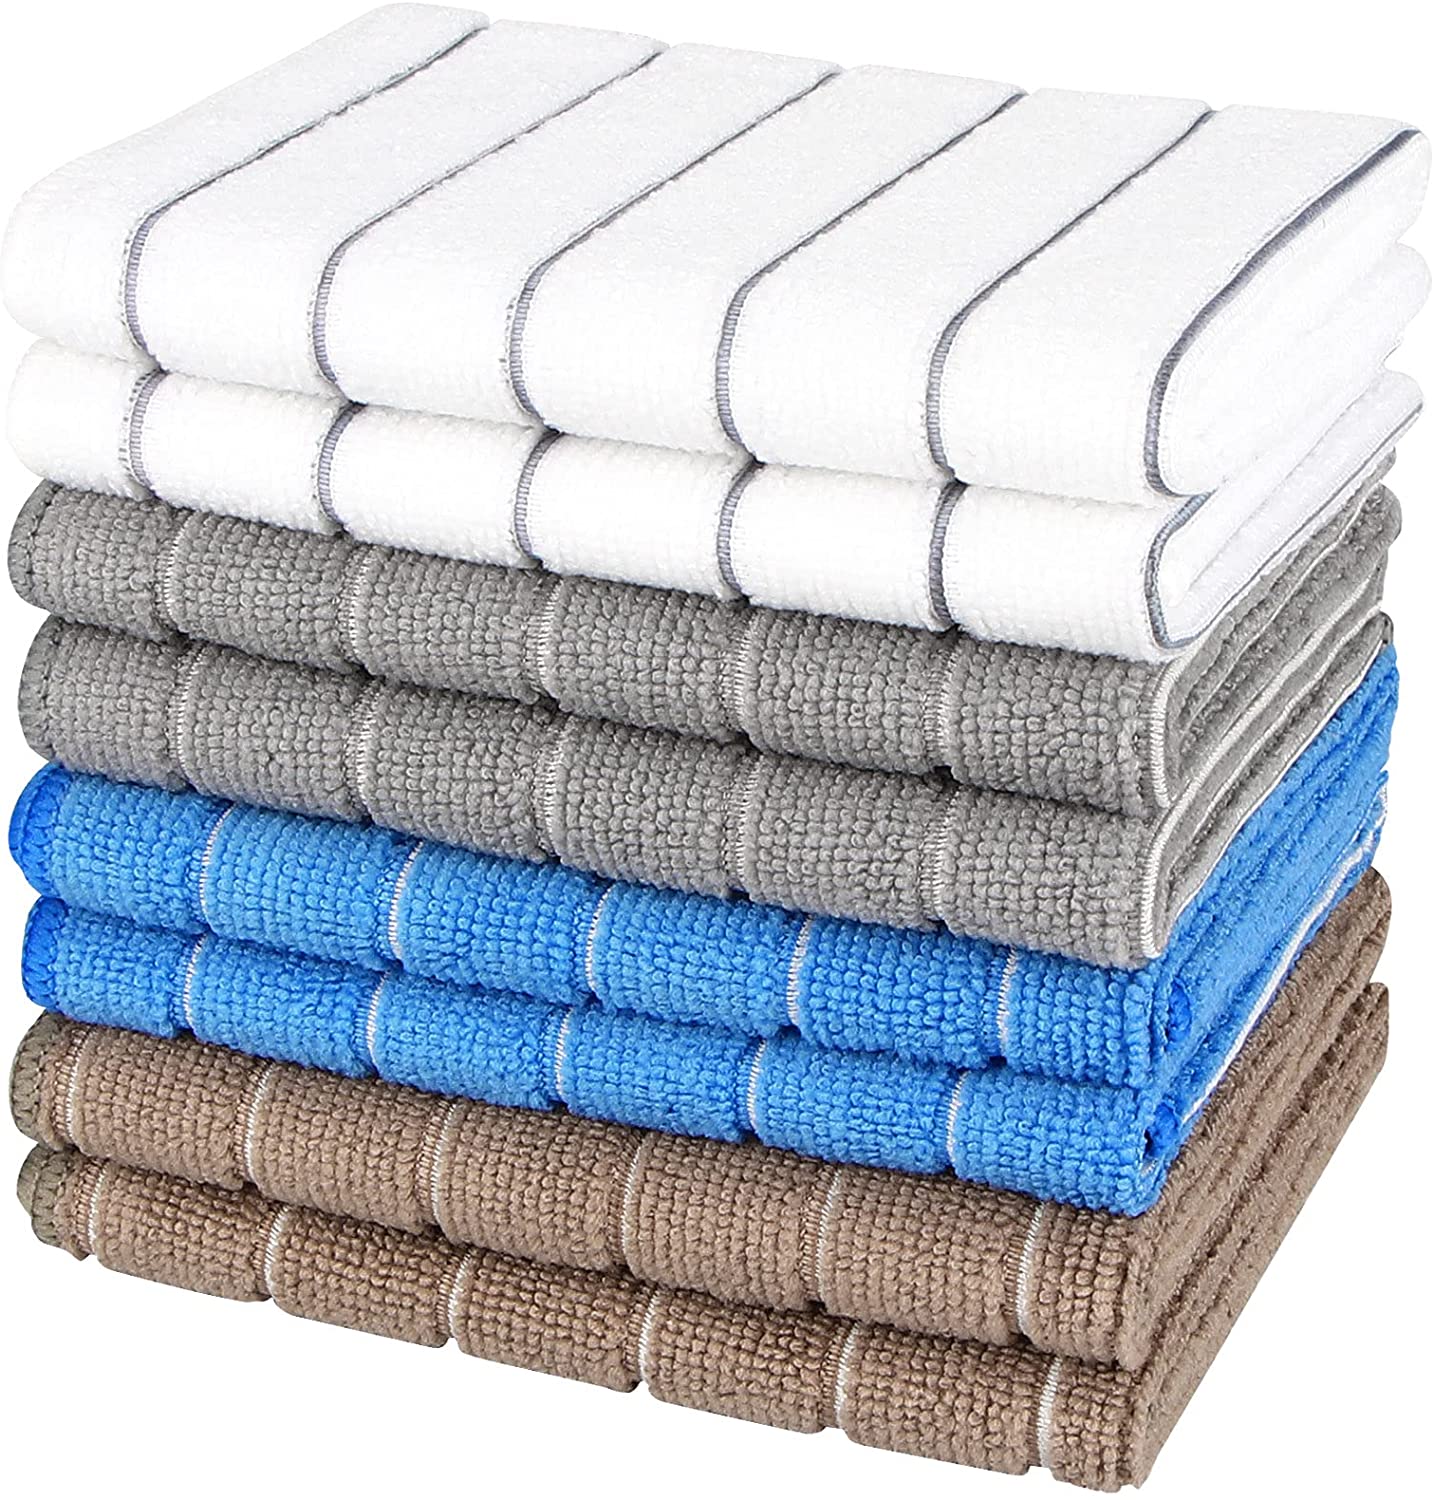 HYER KITCHEN Microfiber Kitchen Towels, Stripe Designed, Super Soft and  Absorben